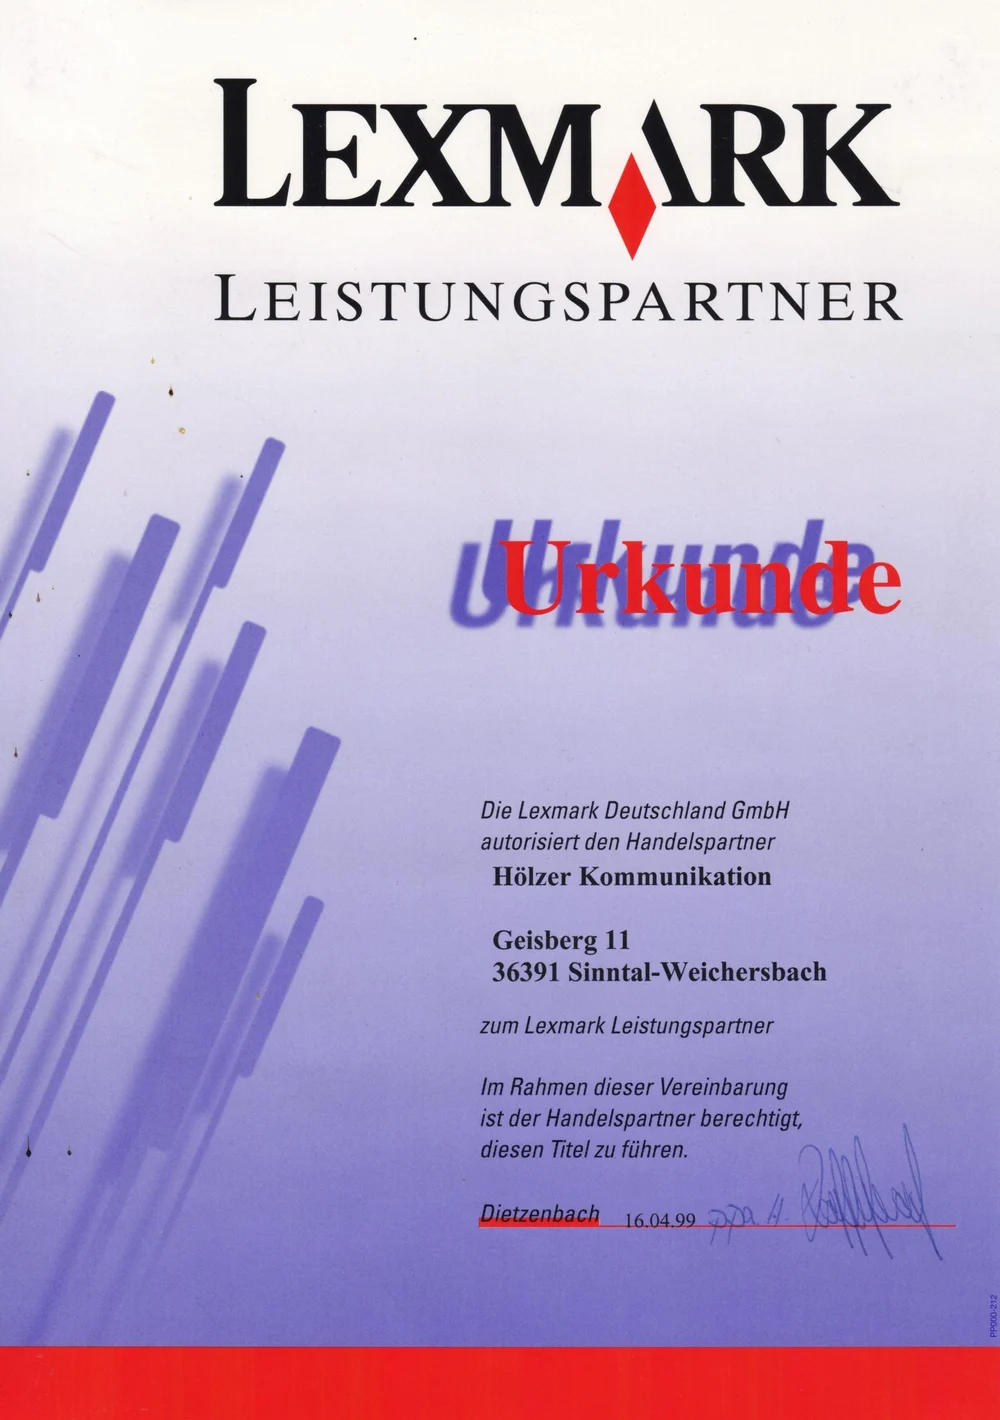 LEXMARK Leitungspartner Urkunde, 1999